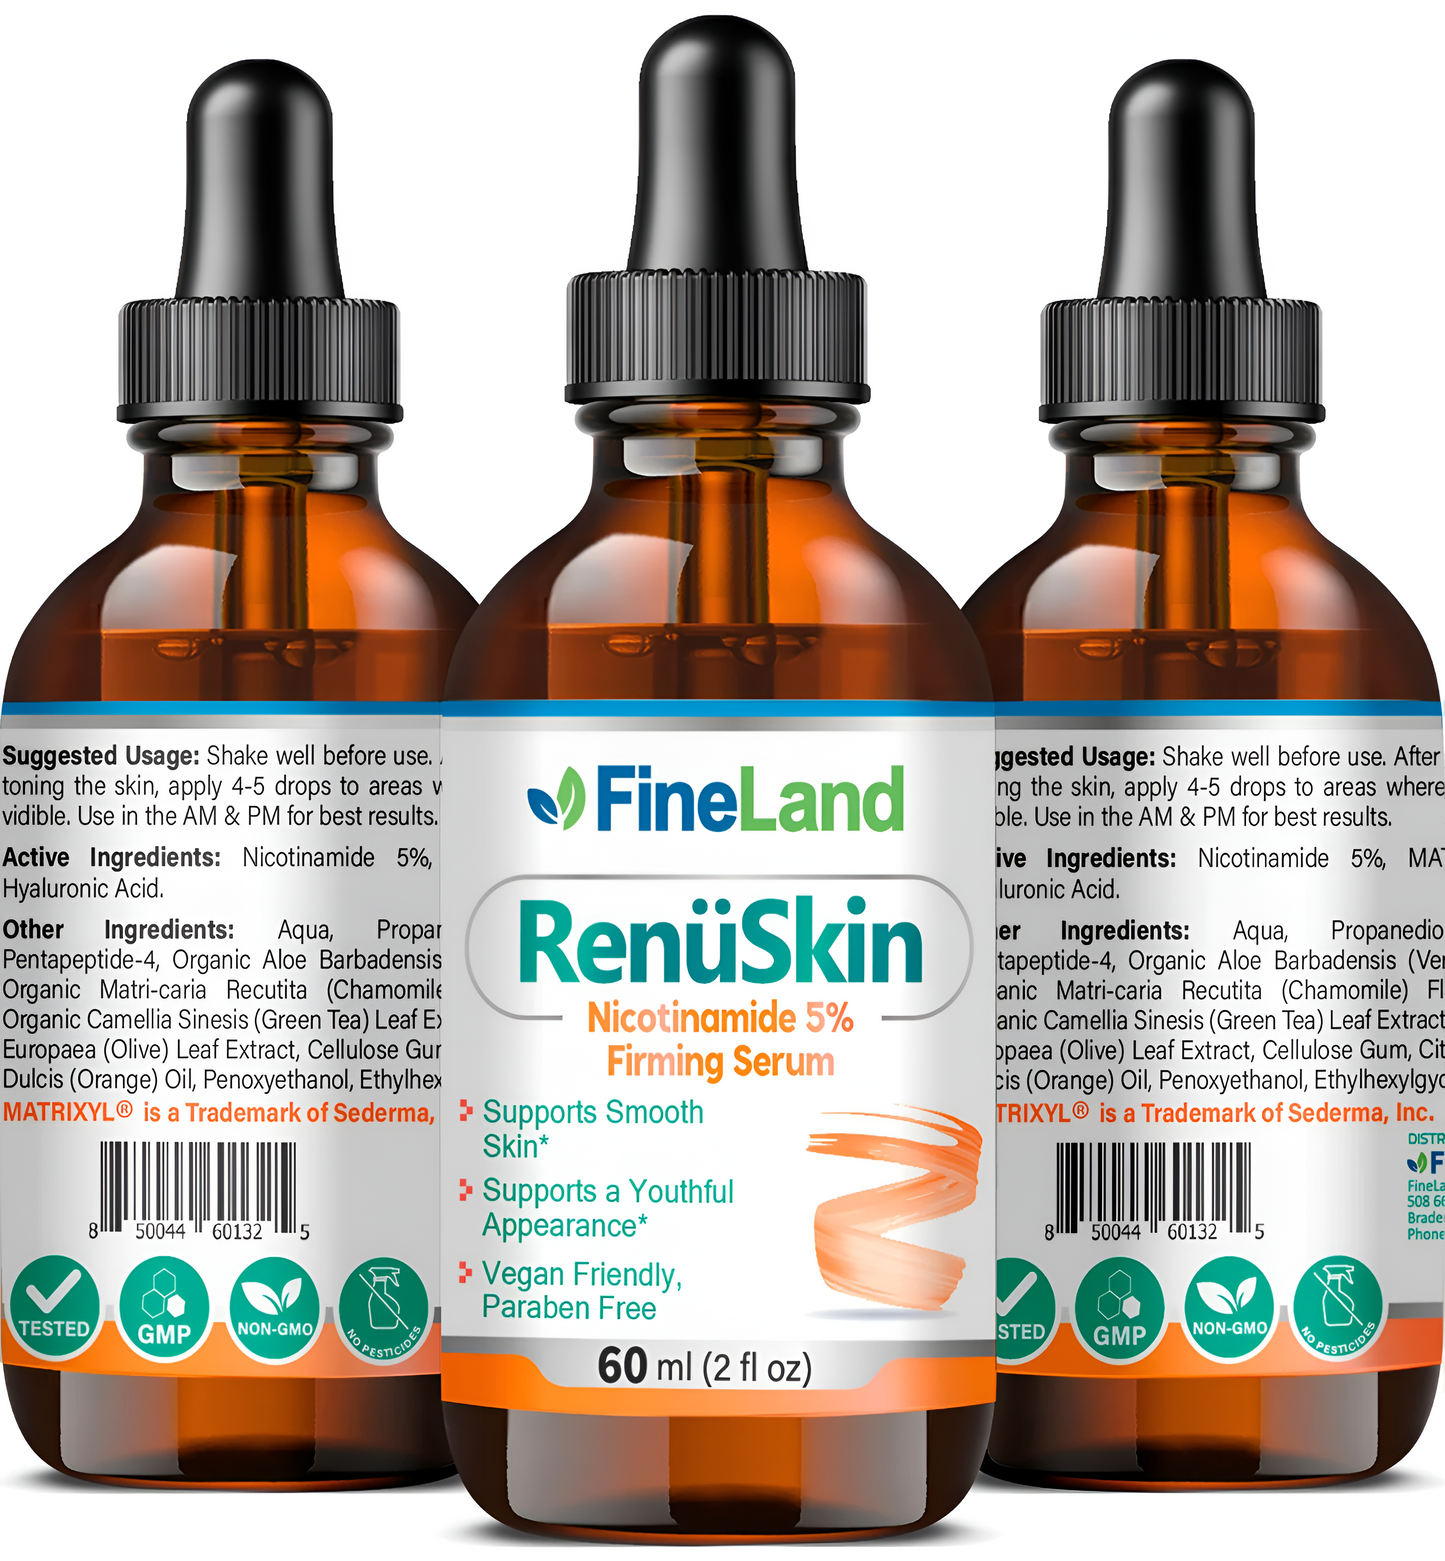 RenuSkin niacinamide 5% -Fineland , 60ml